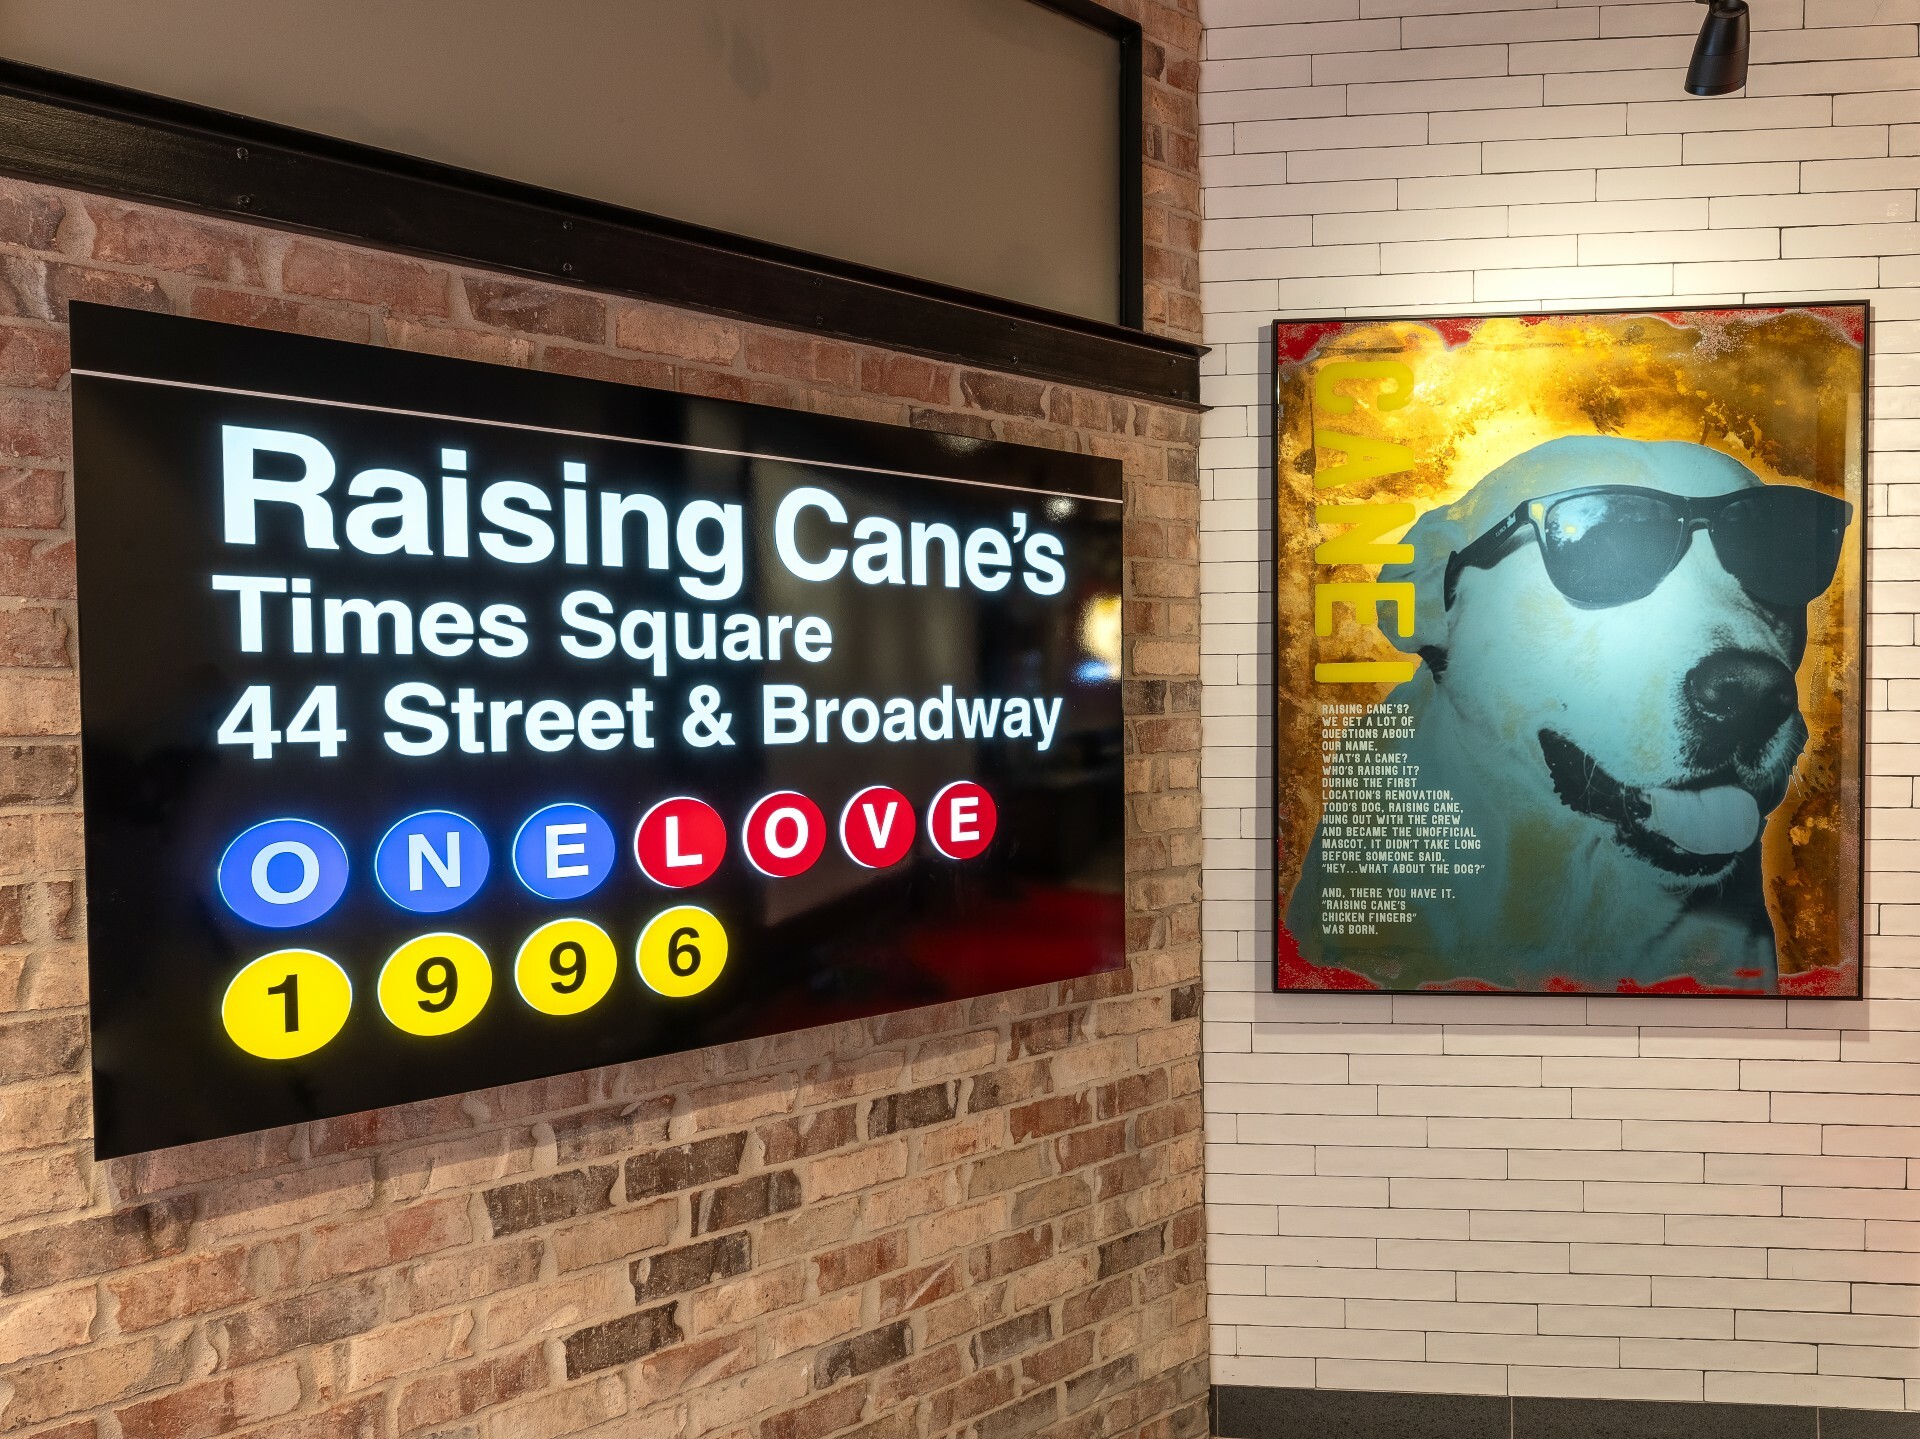 Raising Cane’s interior features also has a raising cane’s subway sign